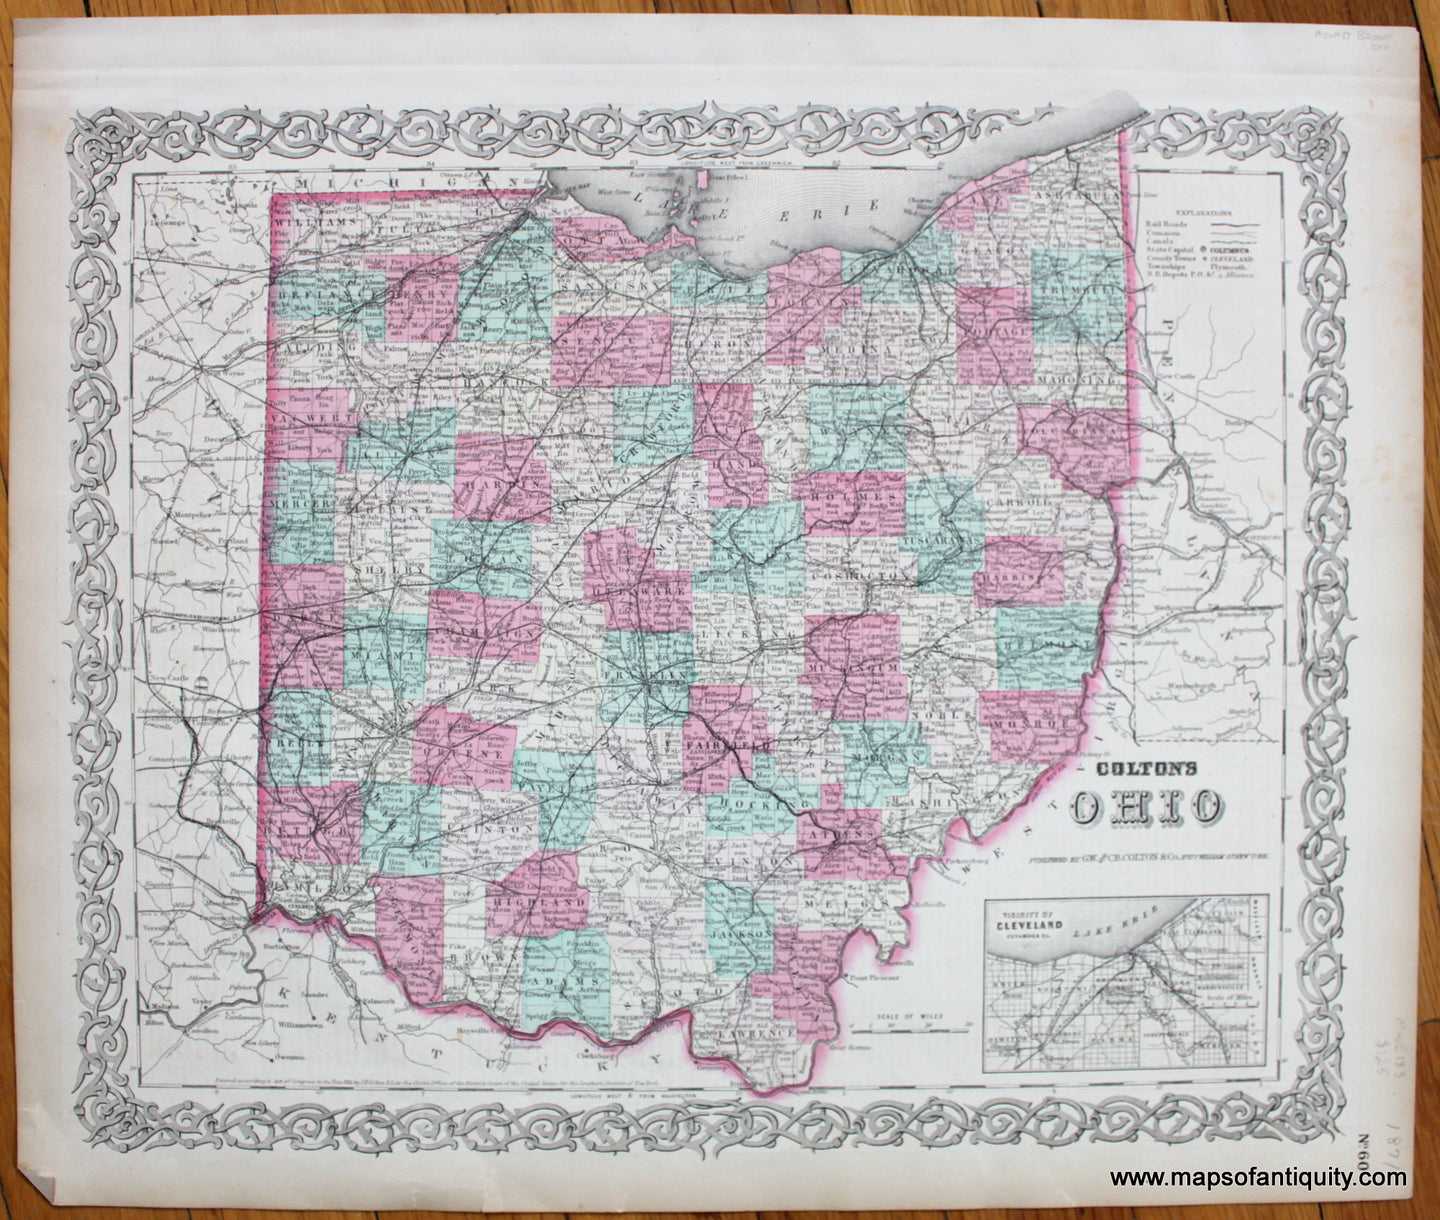 Antique-Hand-Colored-Map-Colton's-Ohio-United-States-Ohio-1871-Colton-Maps-Of-Antiquity